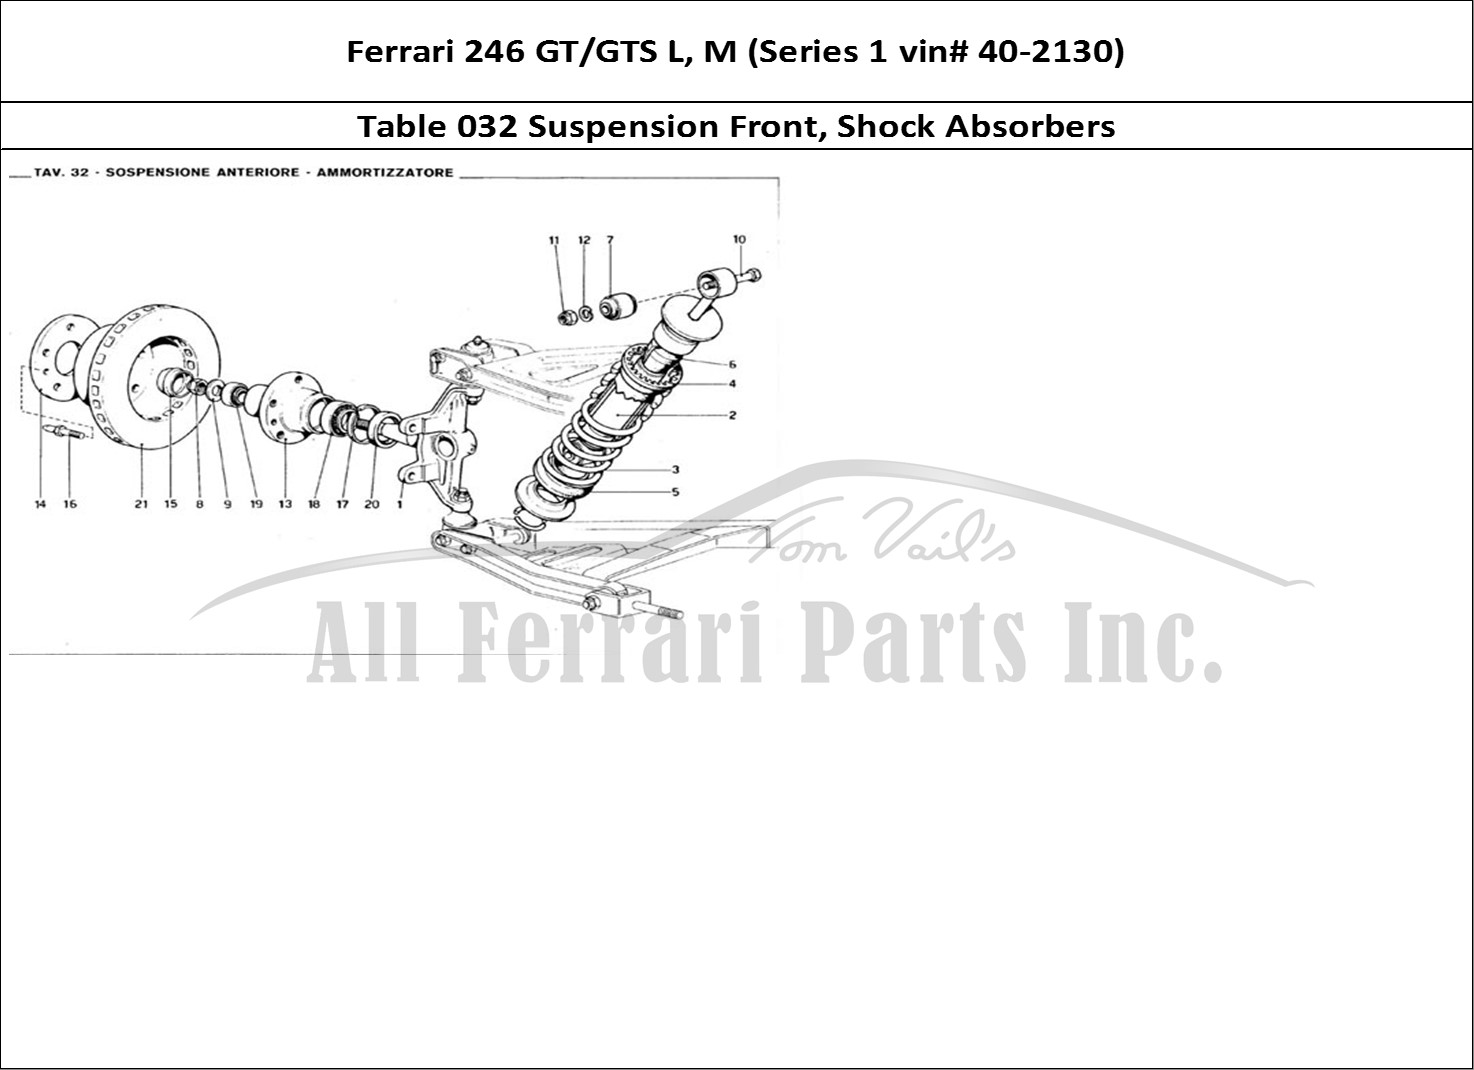 Ferrari Parts Ferrari 246 GT Series 1 Page 032 Front Suspension - Shock